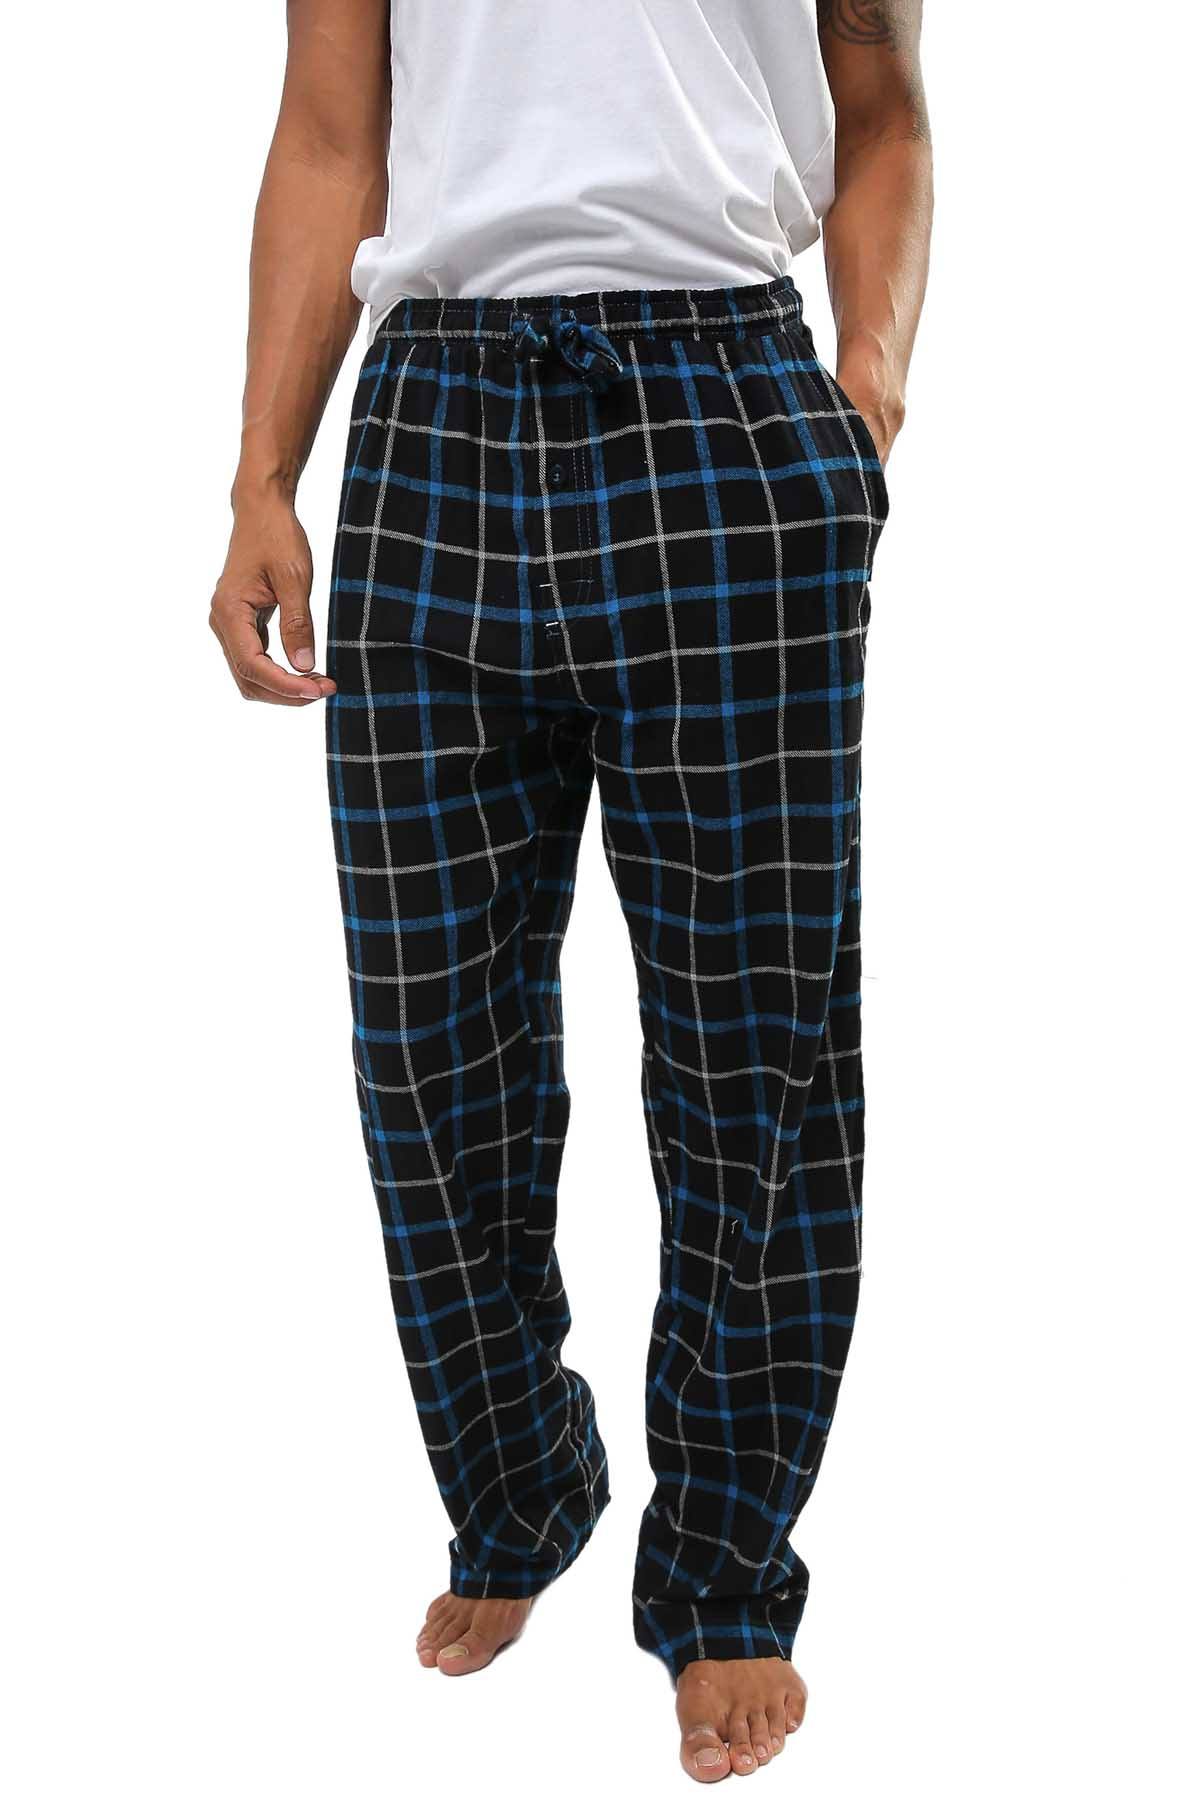 Memphis Blues Black/Blue/White Flannel Pajama Pant | CheapUndies